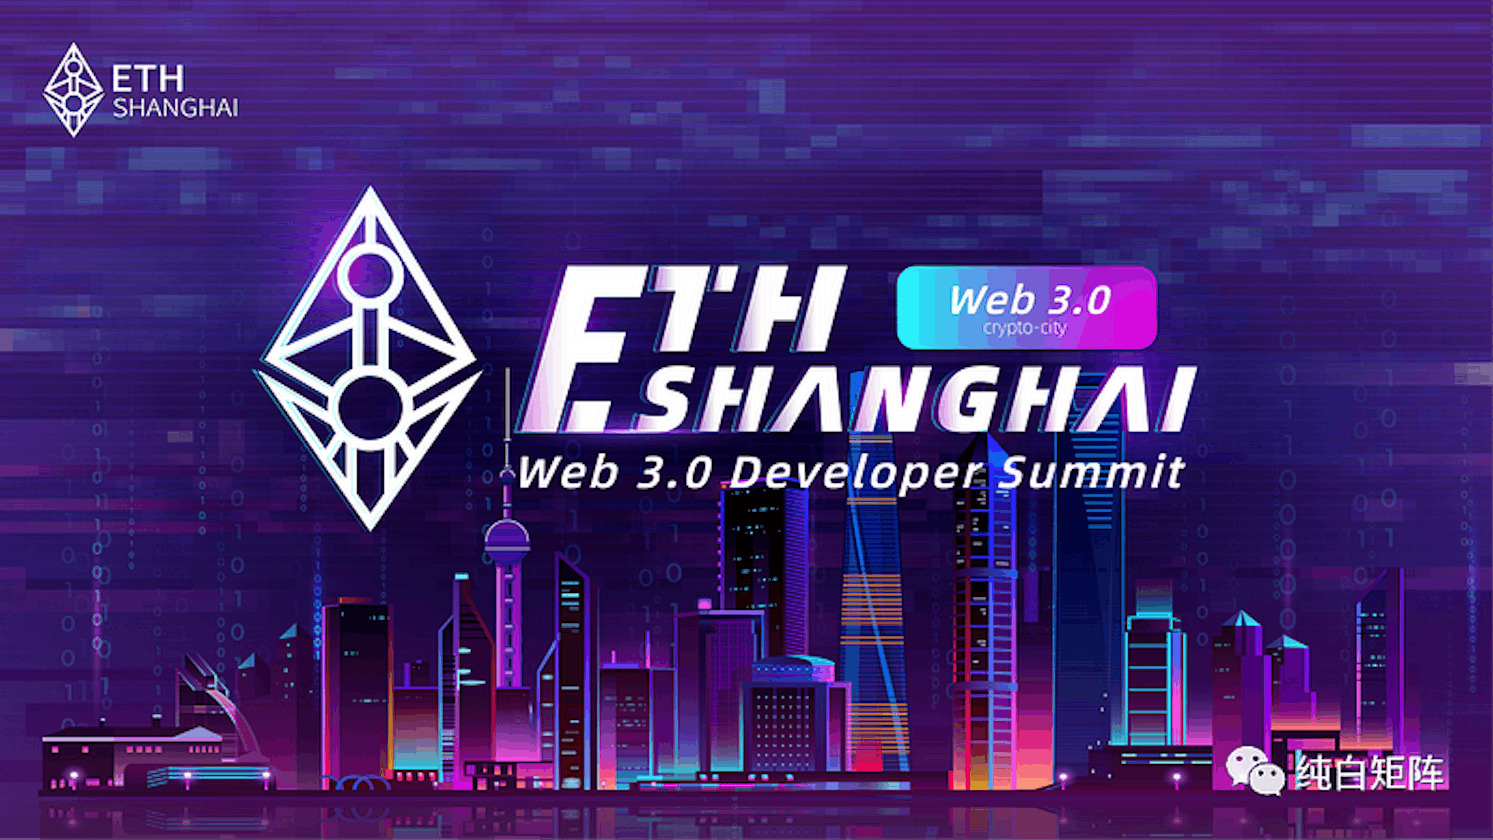 The ETH Shanghai Web3.0